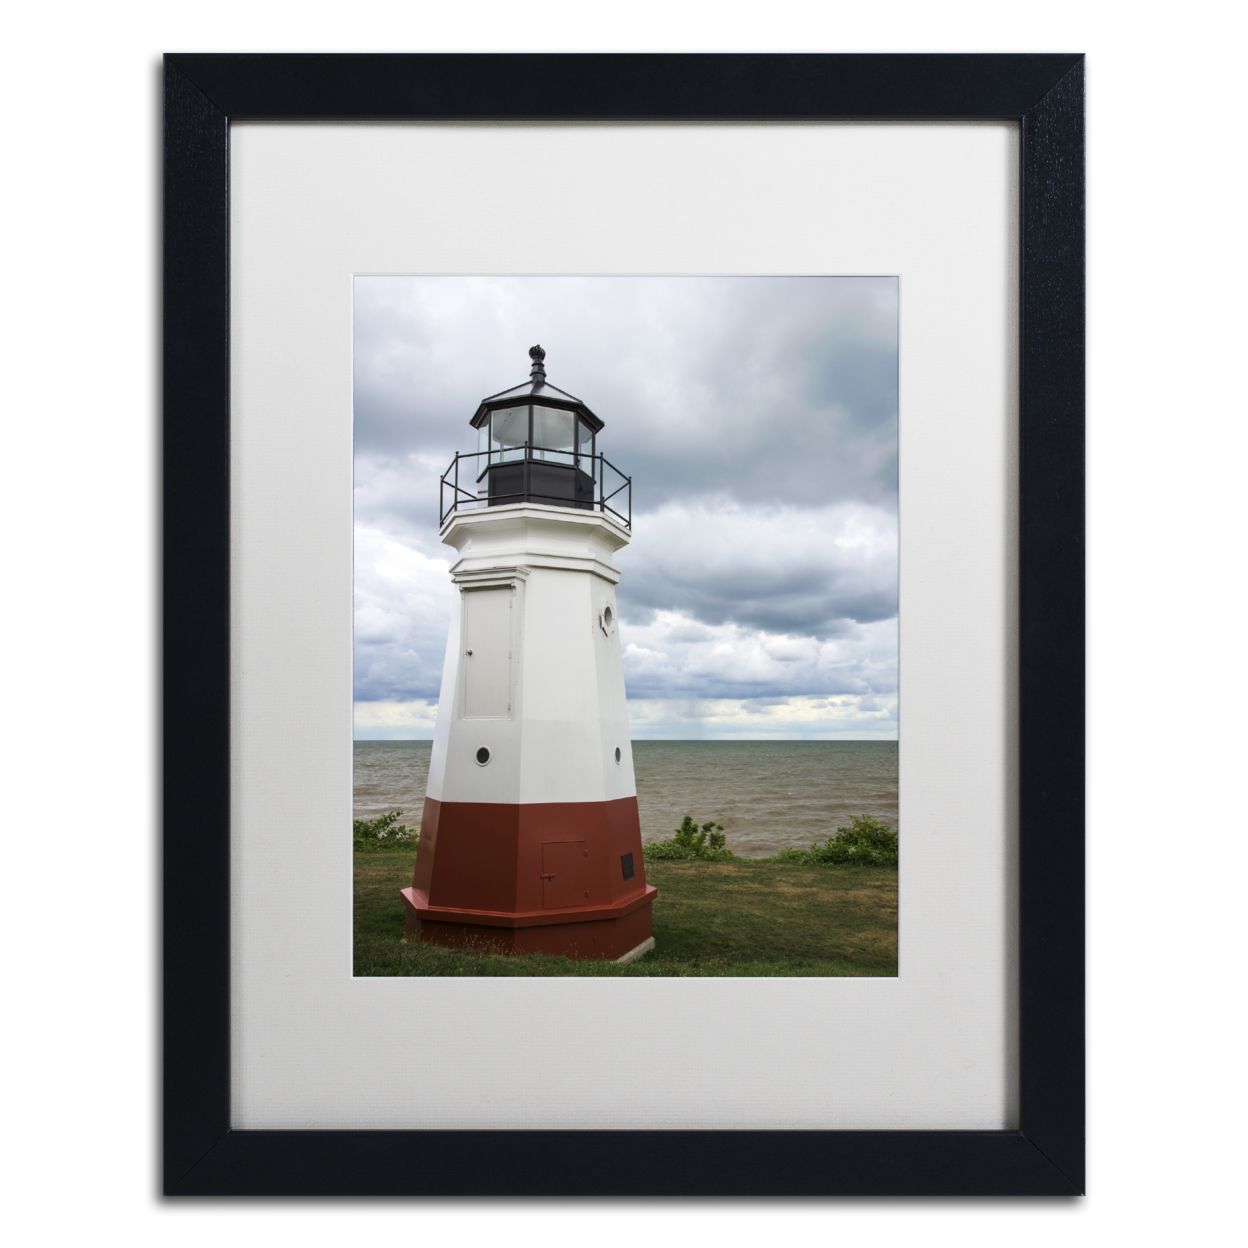 Kurt Shaffer 'Vermillion Ohio Lighthouse' Black Wooden Framed Art 18 X 22 Inches